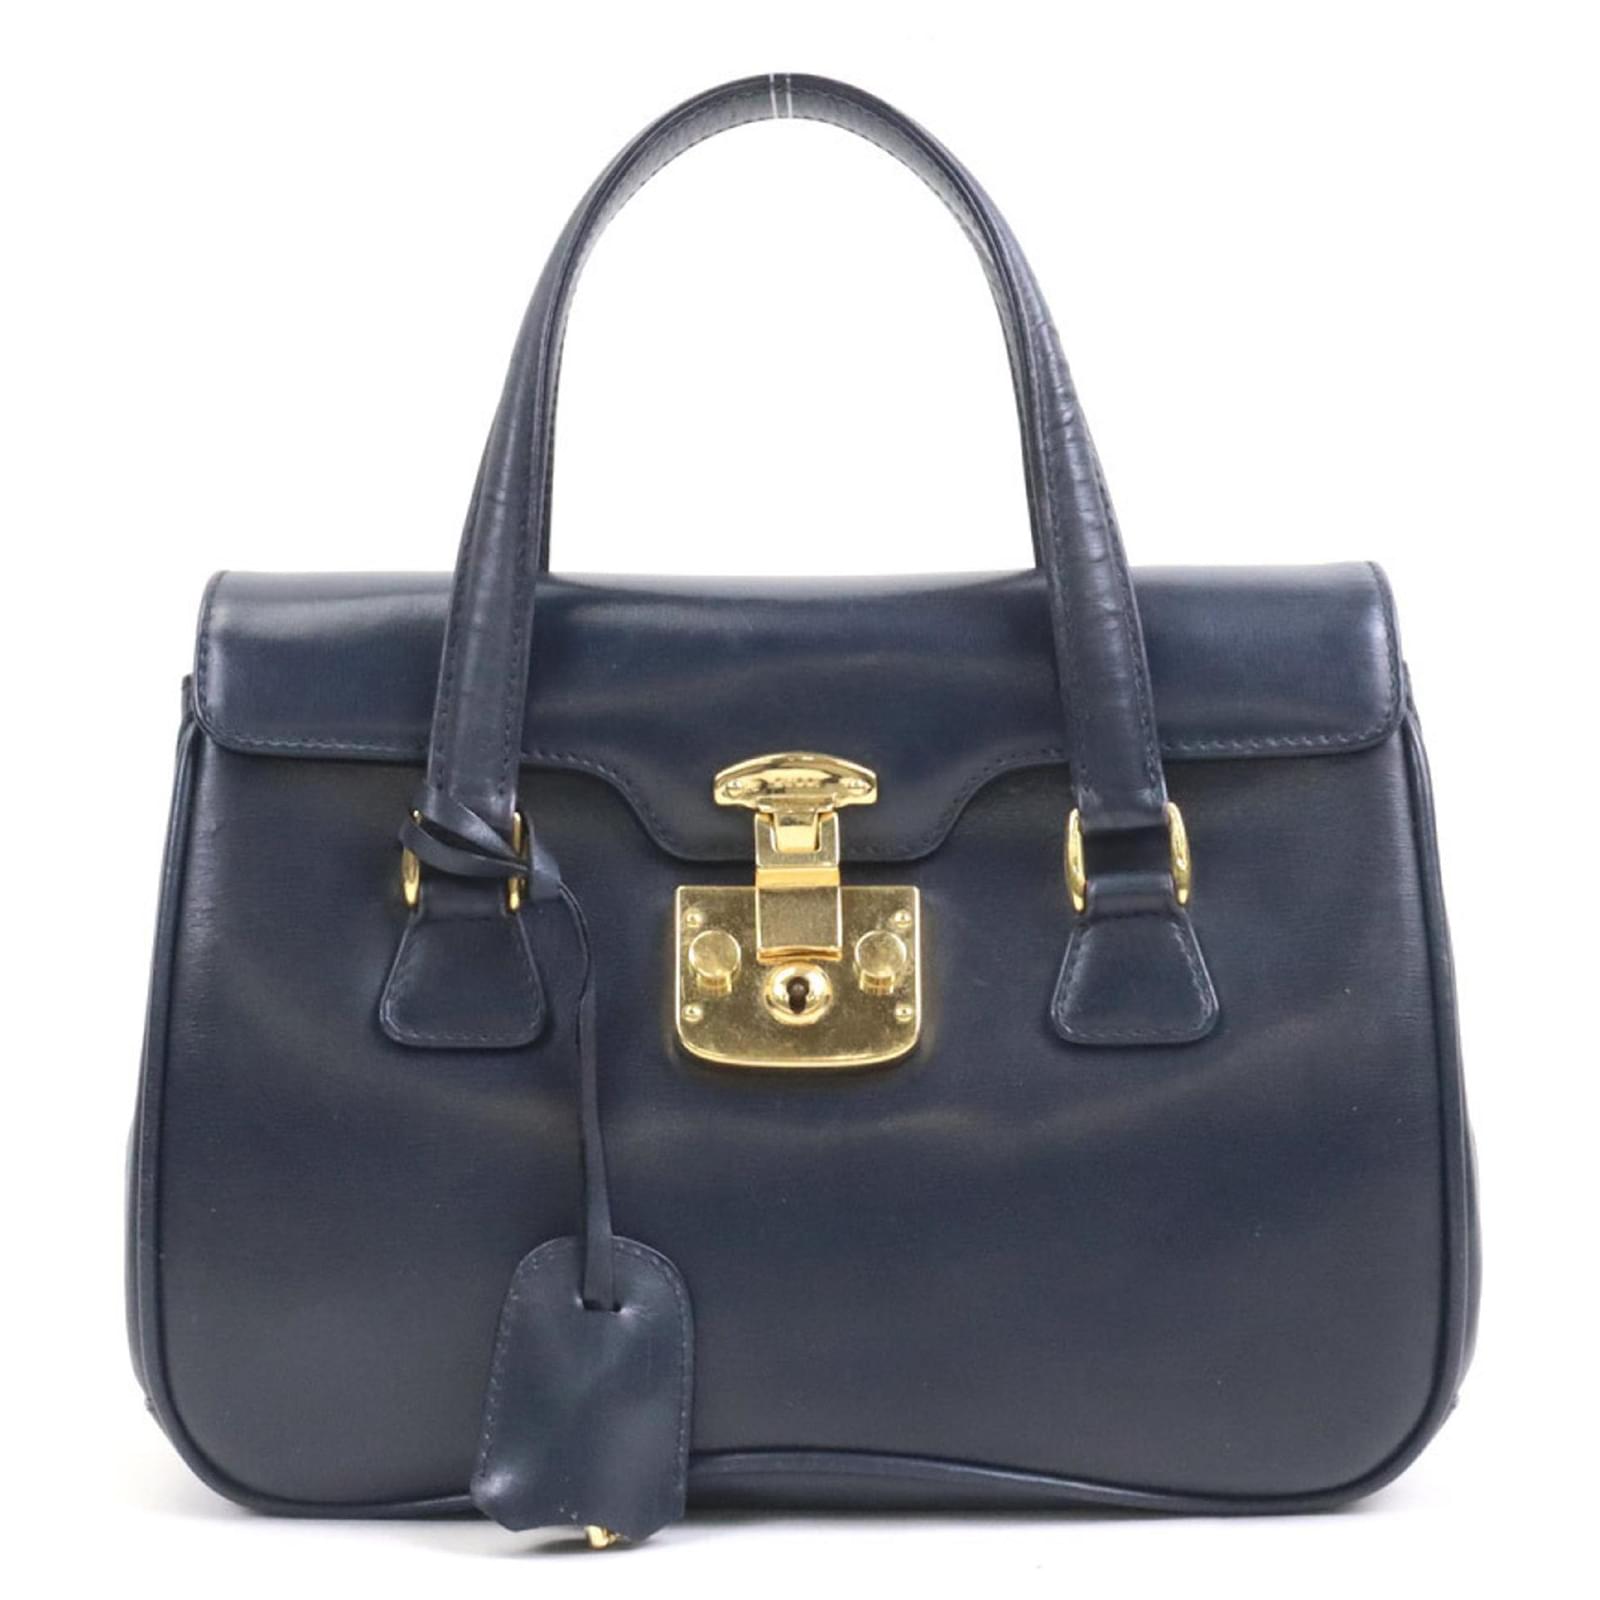 Gucci Vintage Lady Lock Top Handle Bag Navy Blue Leather